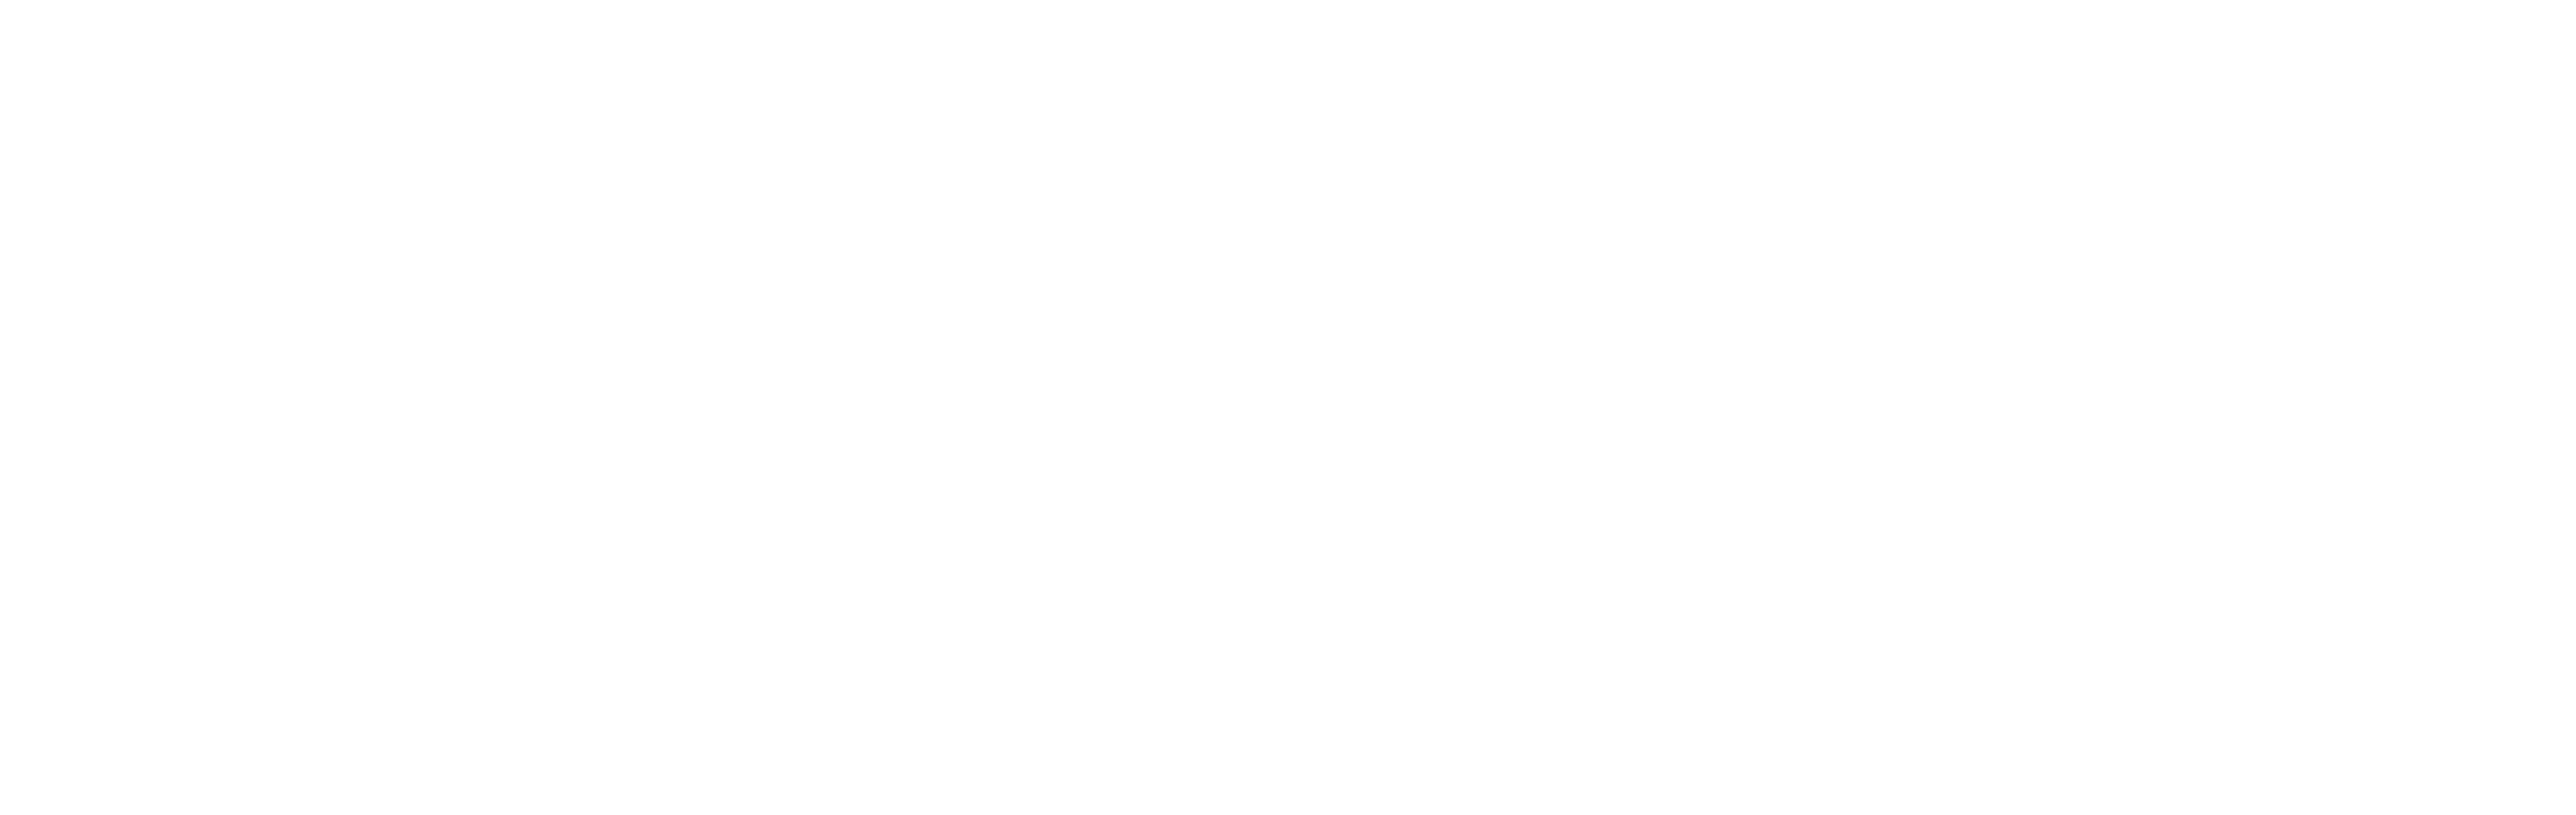 IBM_Security_lockup_rev_RGB